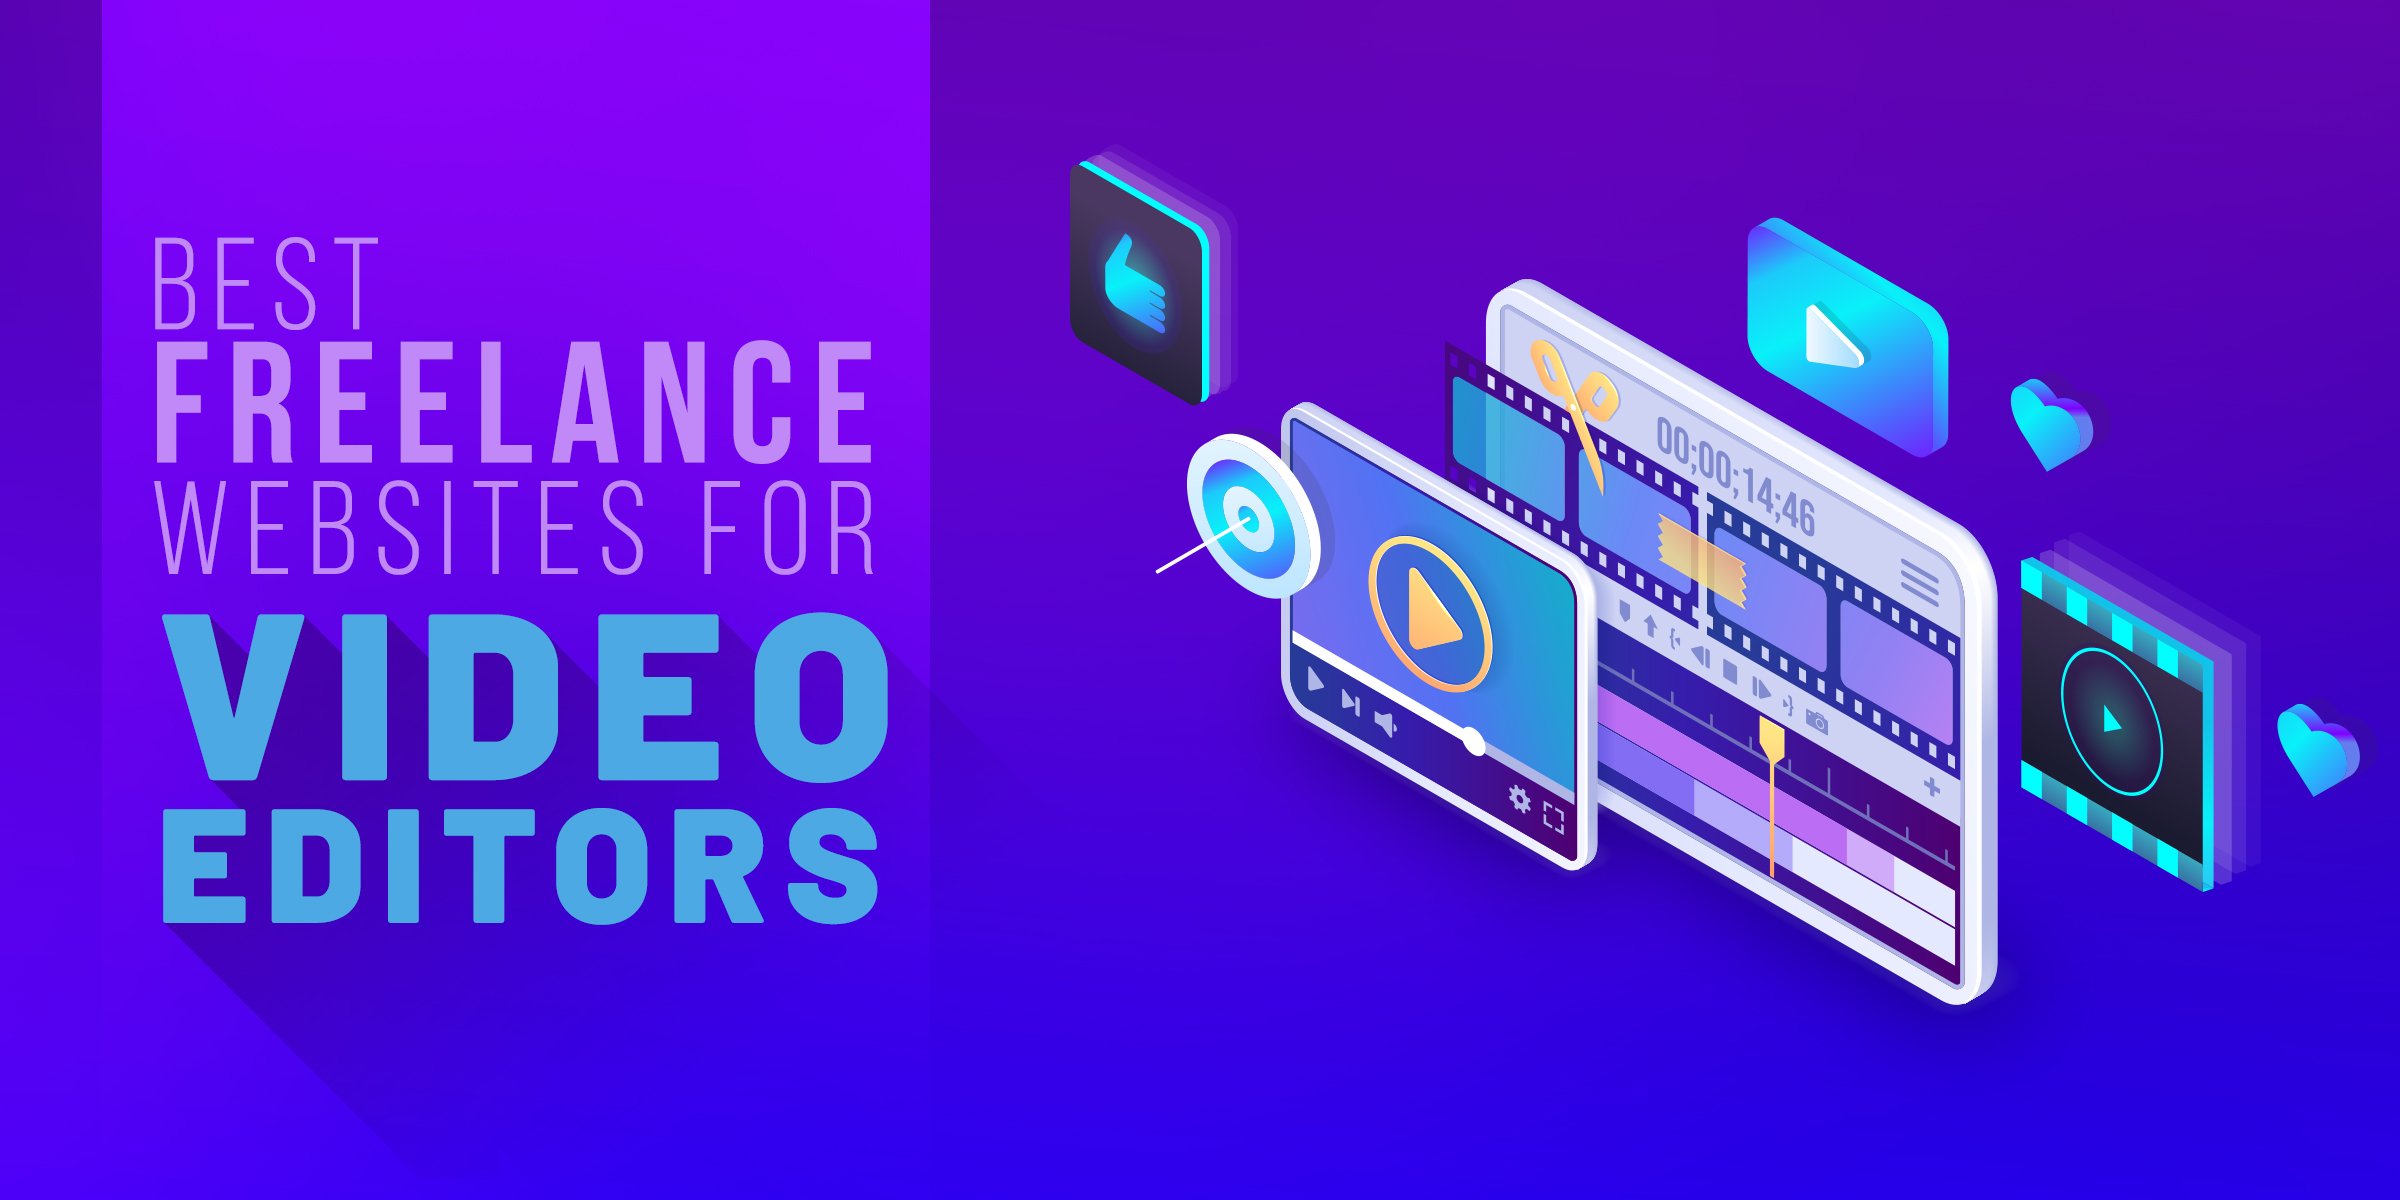 Best Freelance Websites for Video Editors